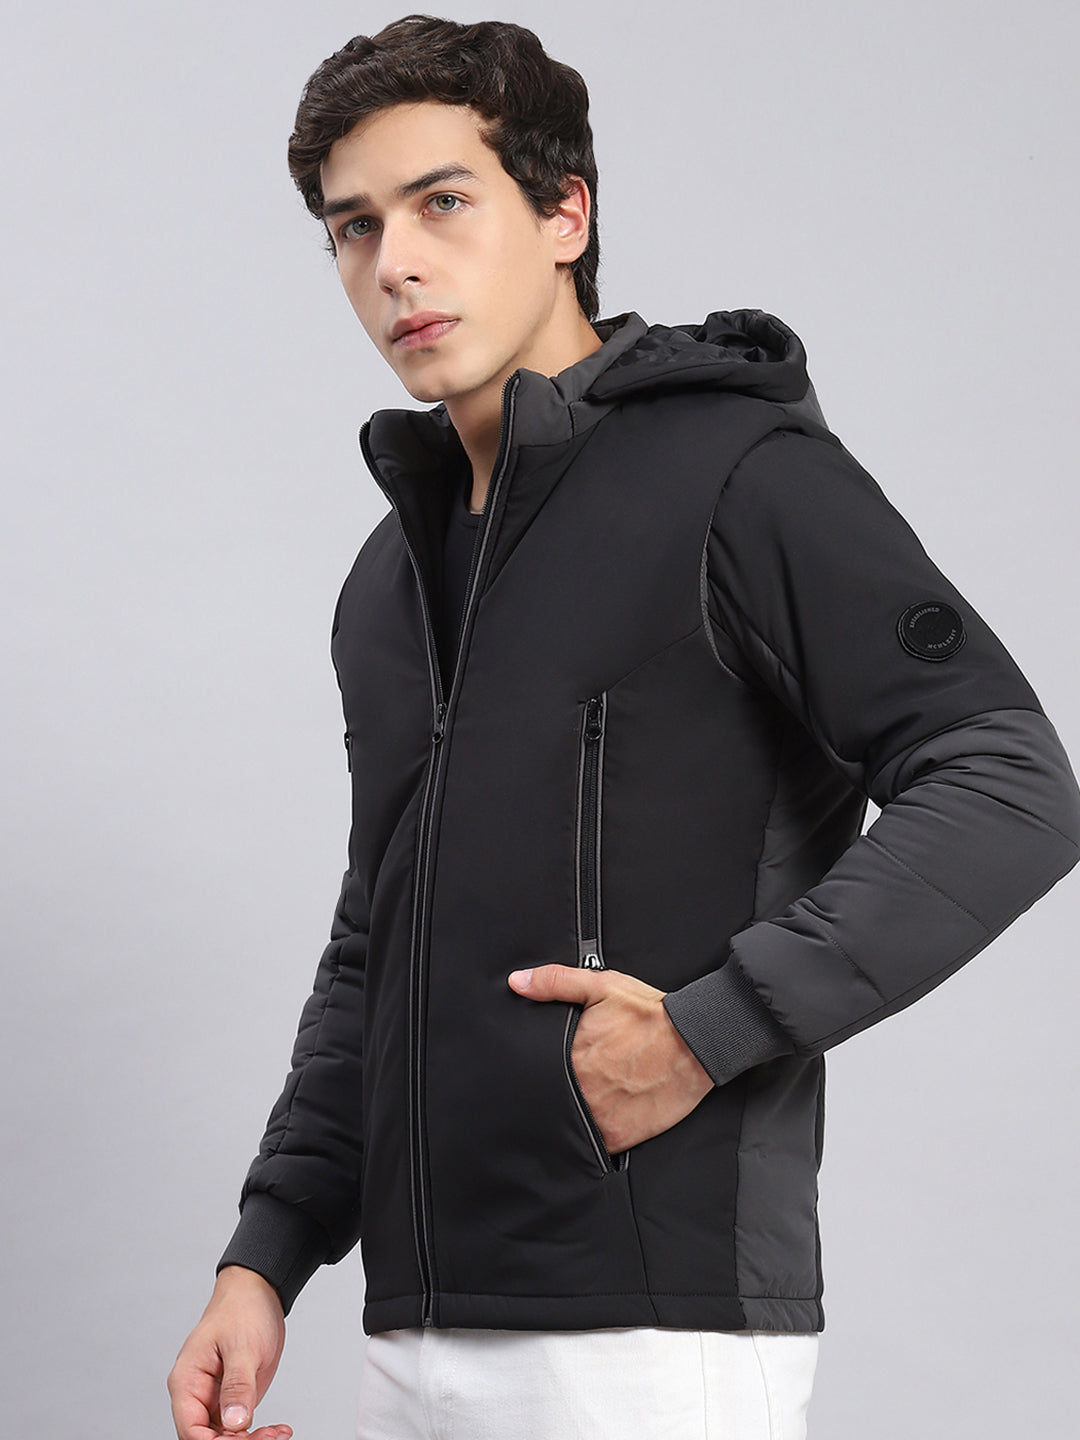 cotton Men black denim jacket hoodie For Mens at Rs 1100/piece in Mumbai |  ID: 16479224012